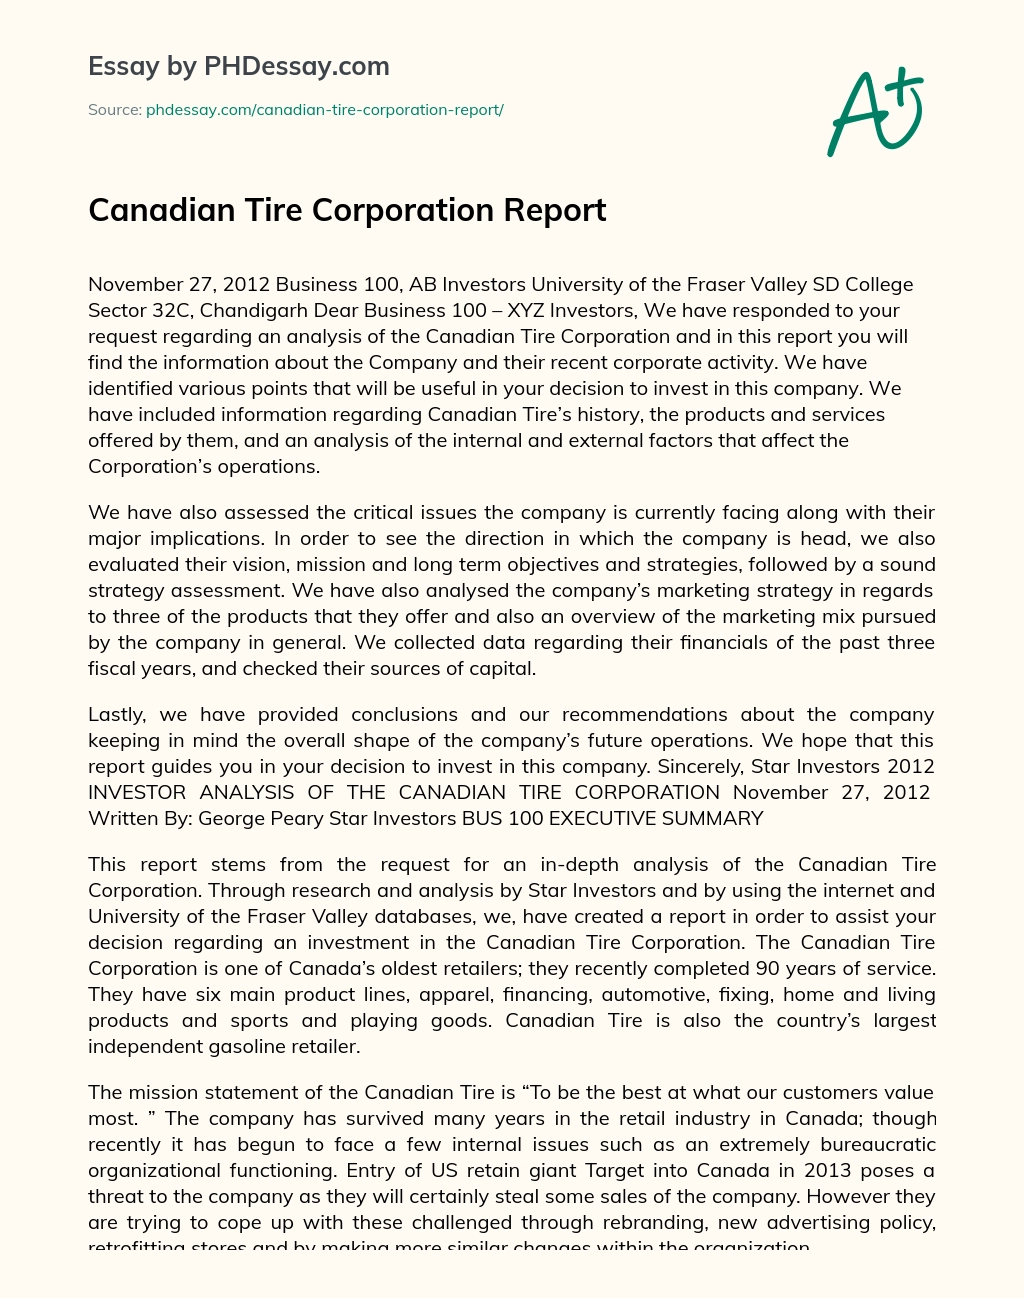 Canadian Tire Corporation Report essay